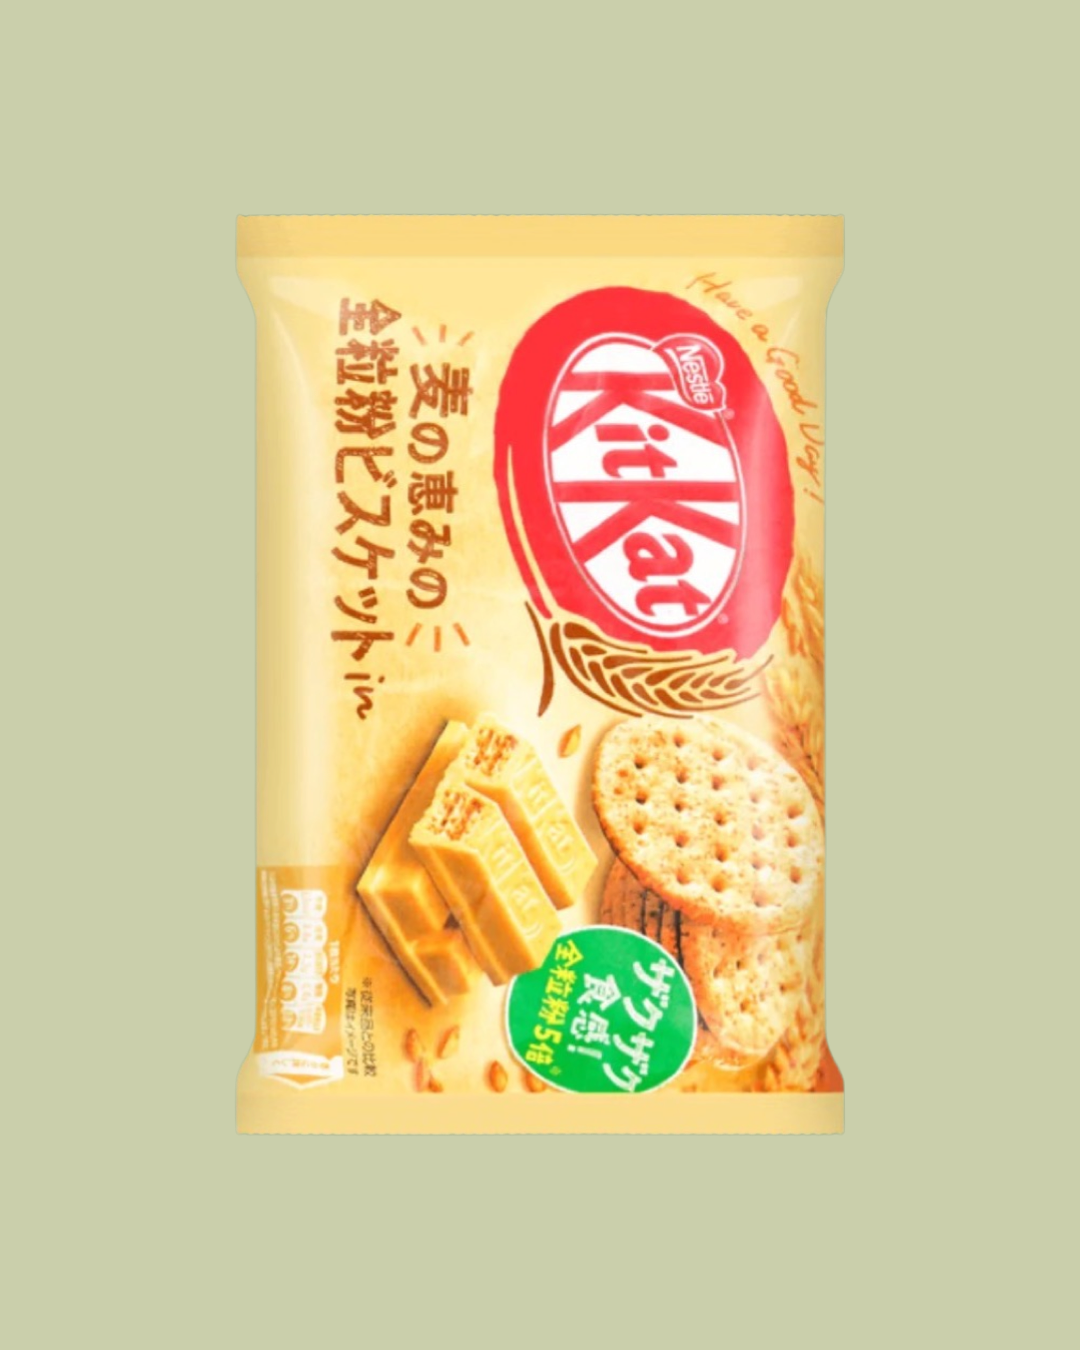 Whole Grain Biscuit (Japan)